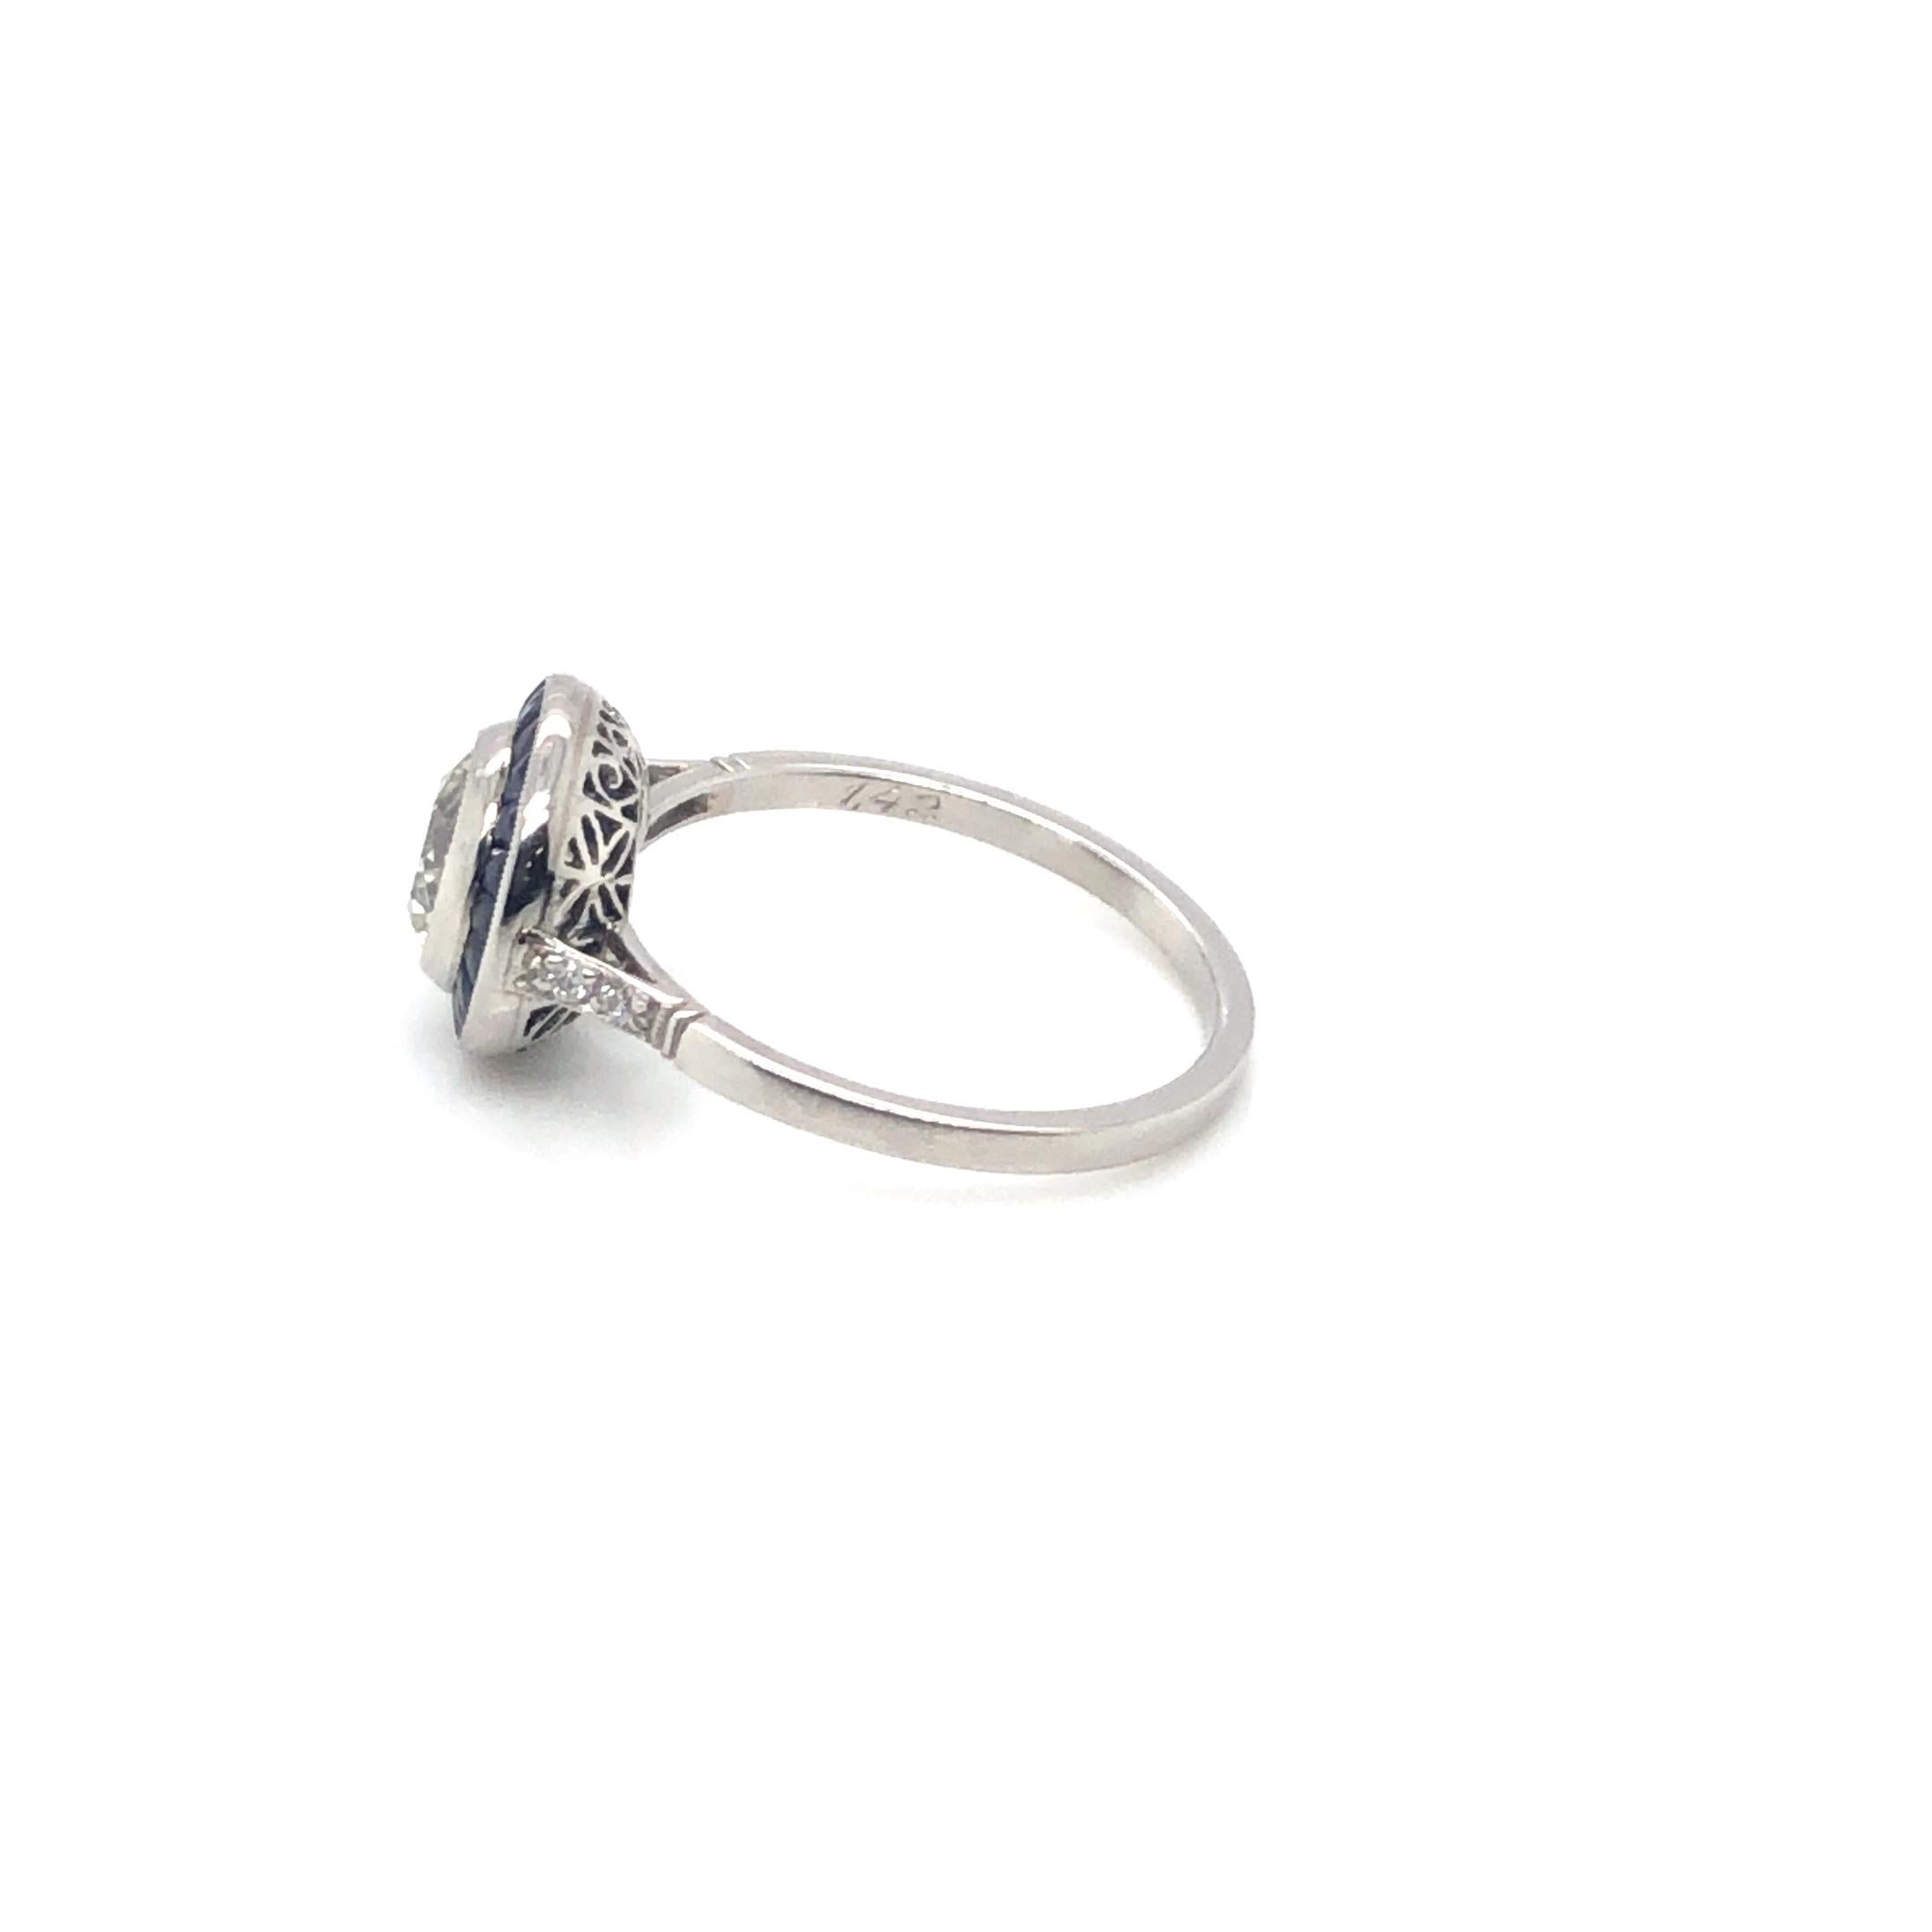 Platinum 1.42ct European Cut Diamond & 0.80ctw Sapphire Ring Size 7.5 4.36 Grams